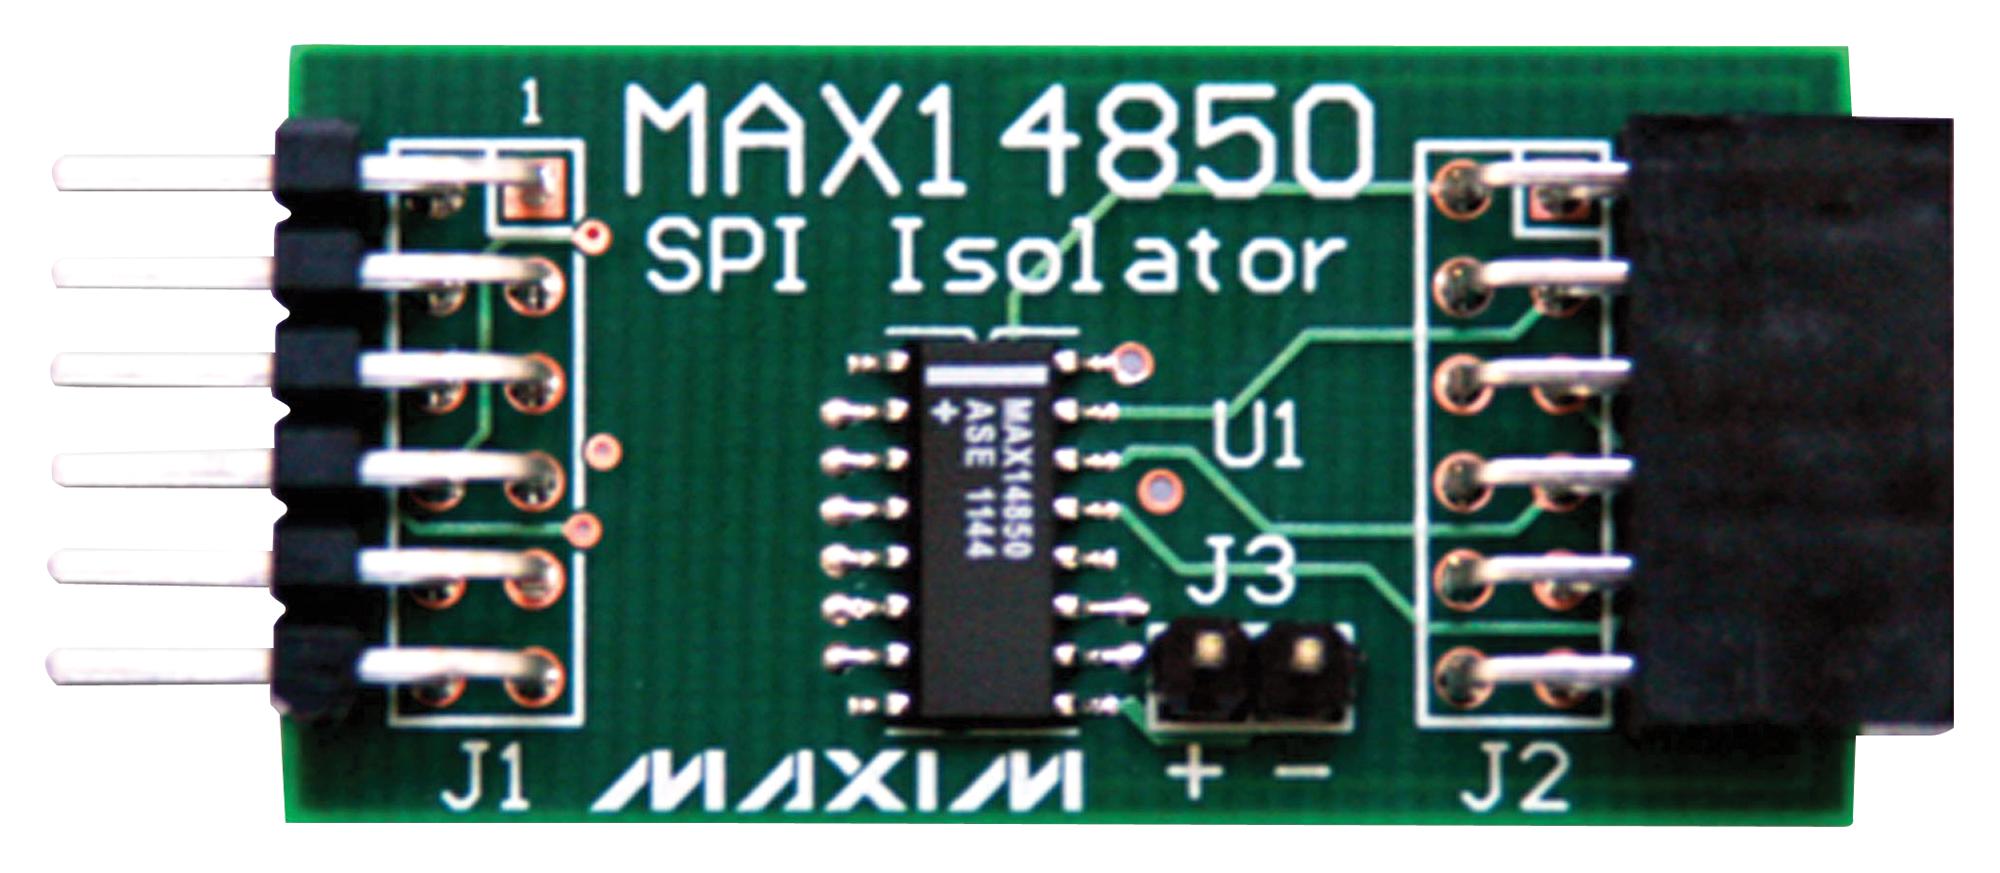 MAX14850PMB1# EVALUATION BOARD, DIGITAL ISOLATOR MAXIM INTEGRATED / ANALOG DEVICES